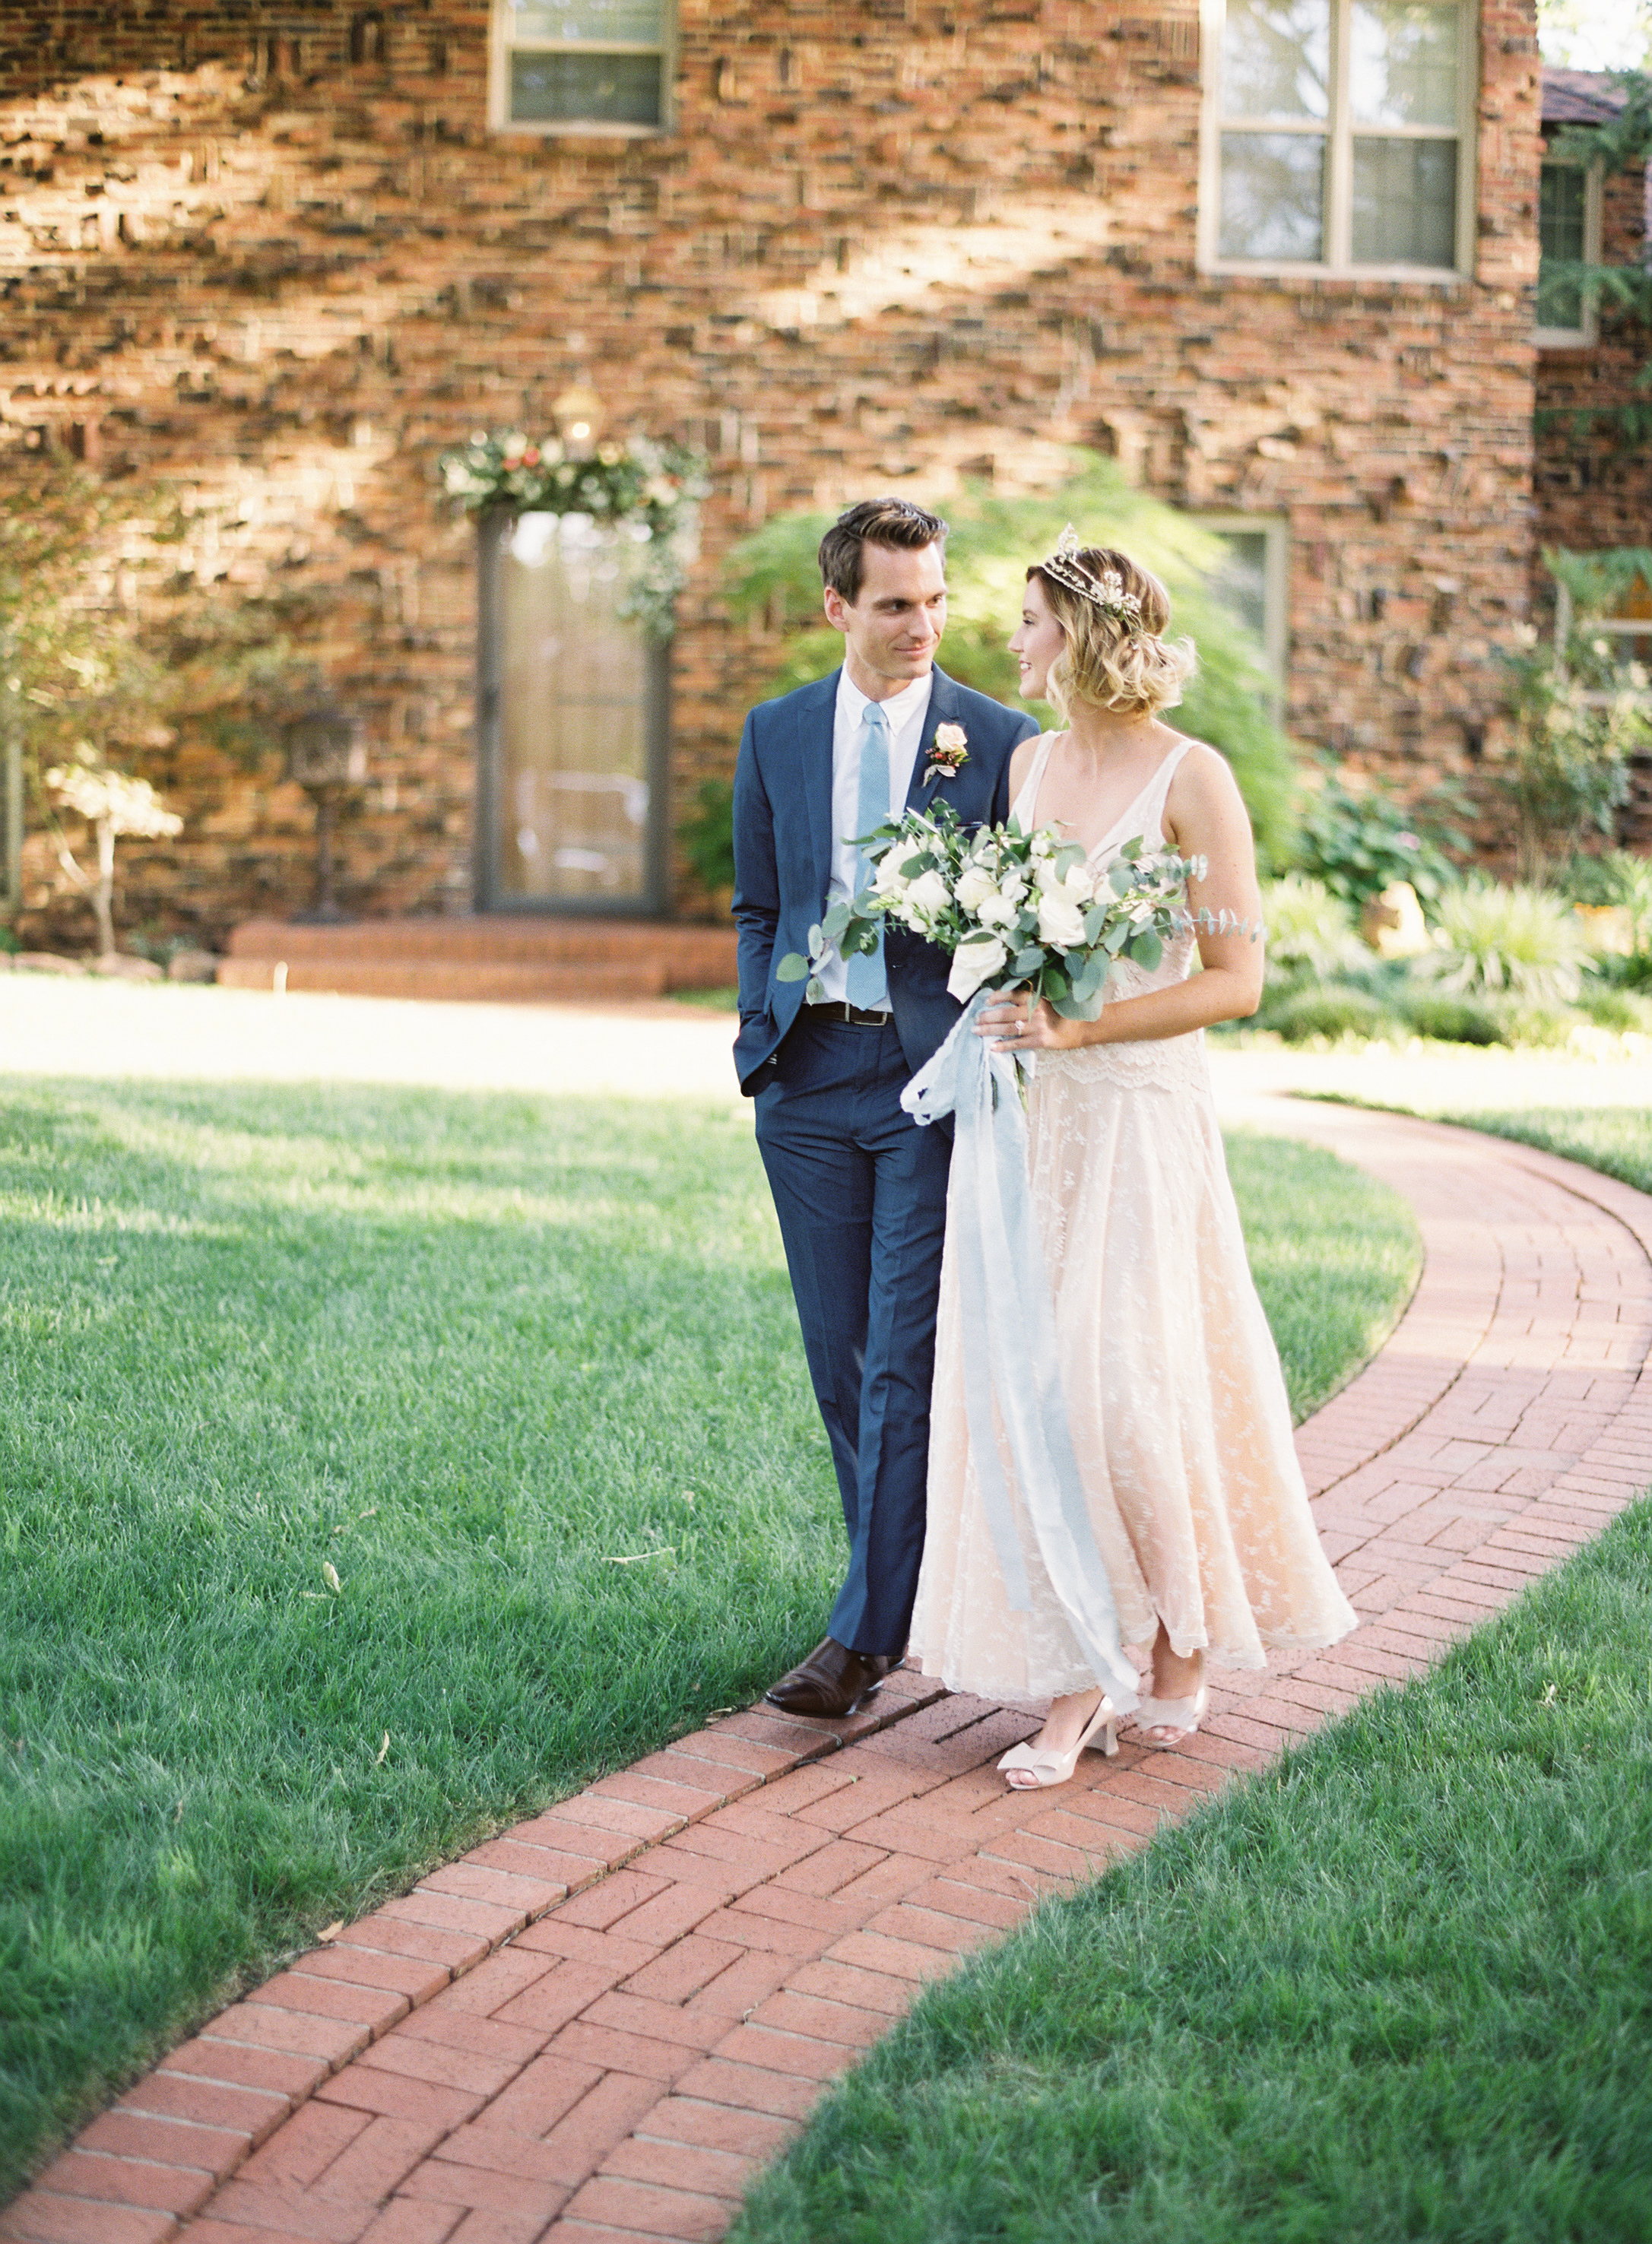 Stylish Backyard Wedding - Lindsey Brunk